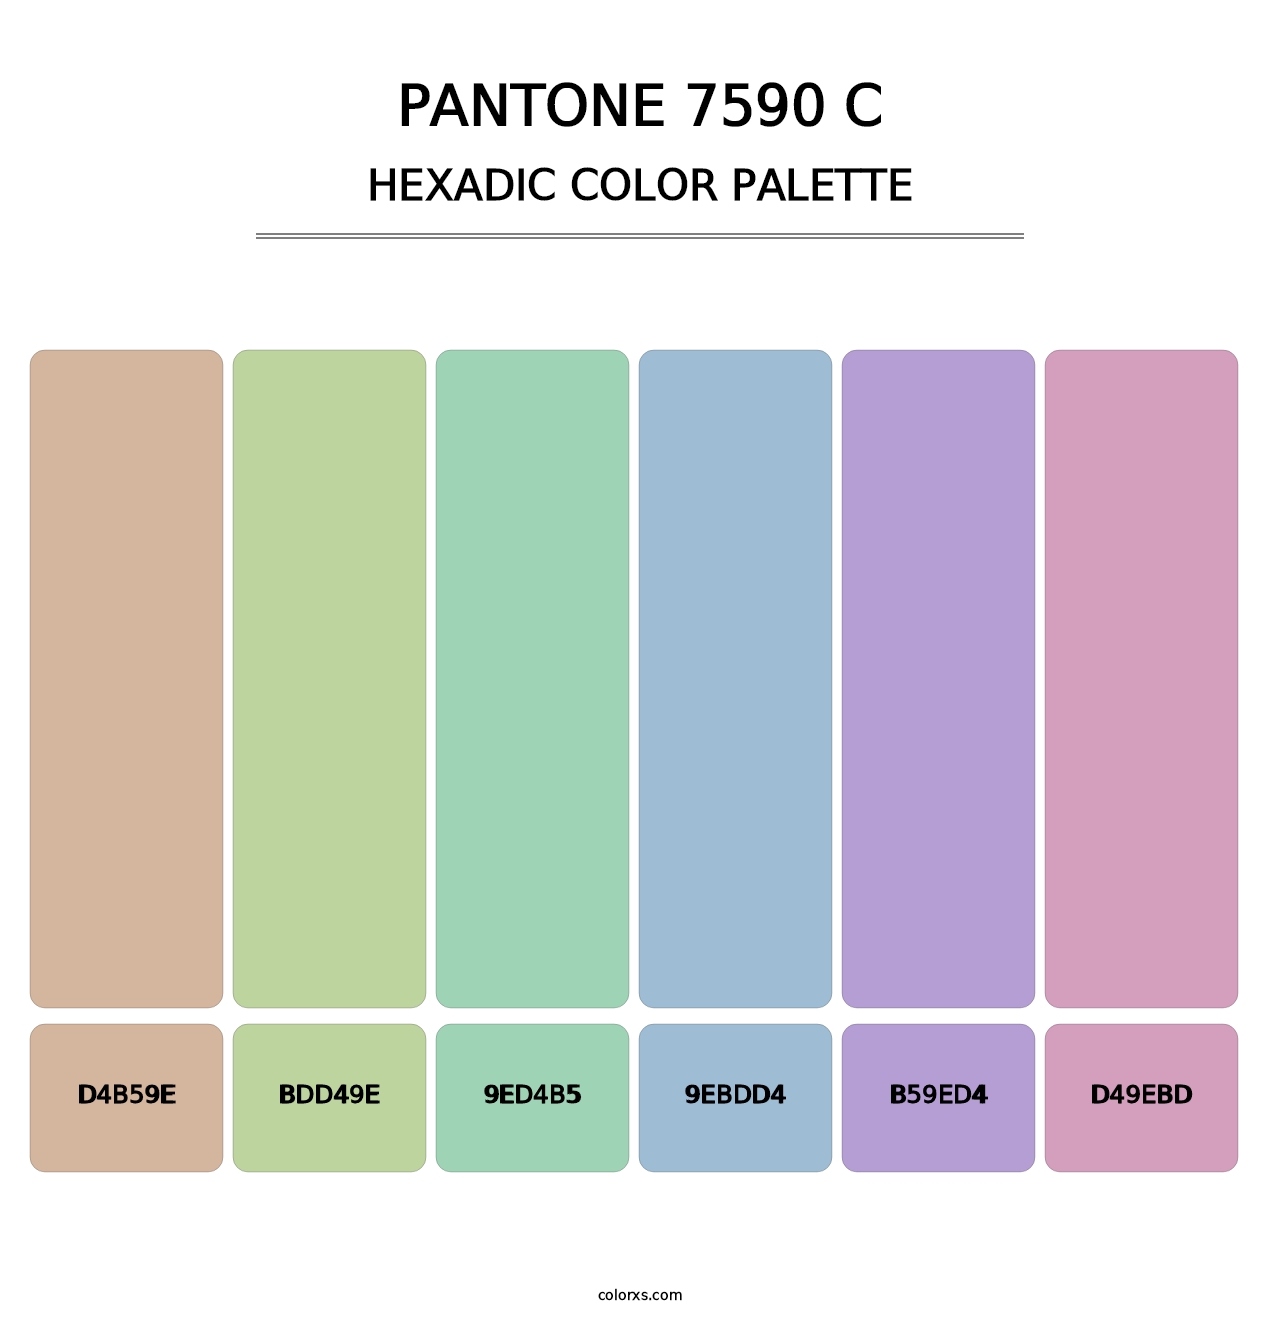 PANTONE 7590 C - Hexadic Color Palette